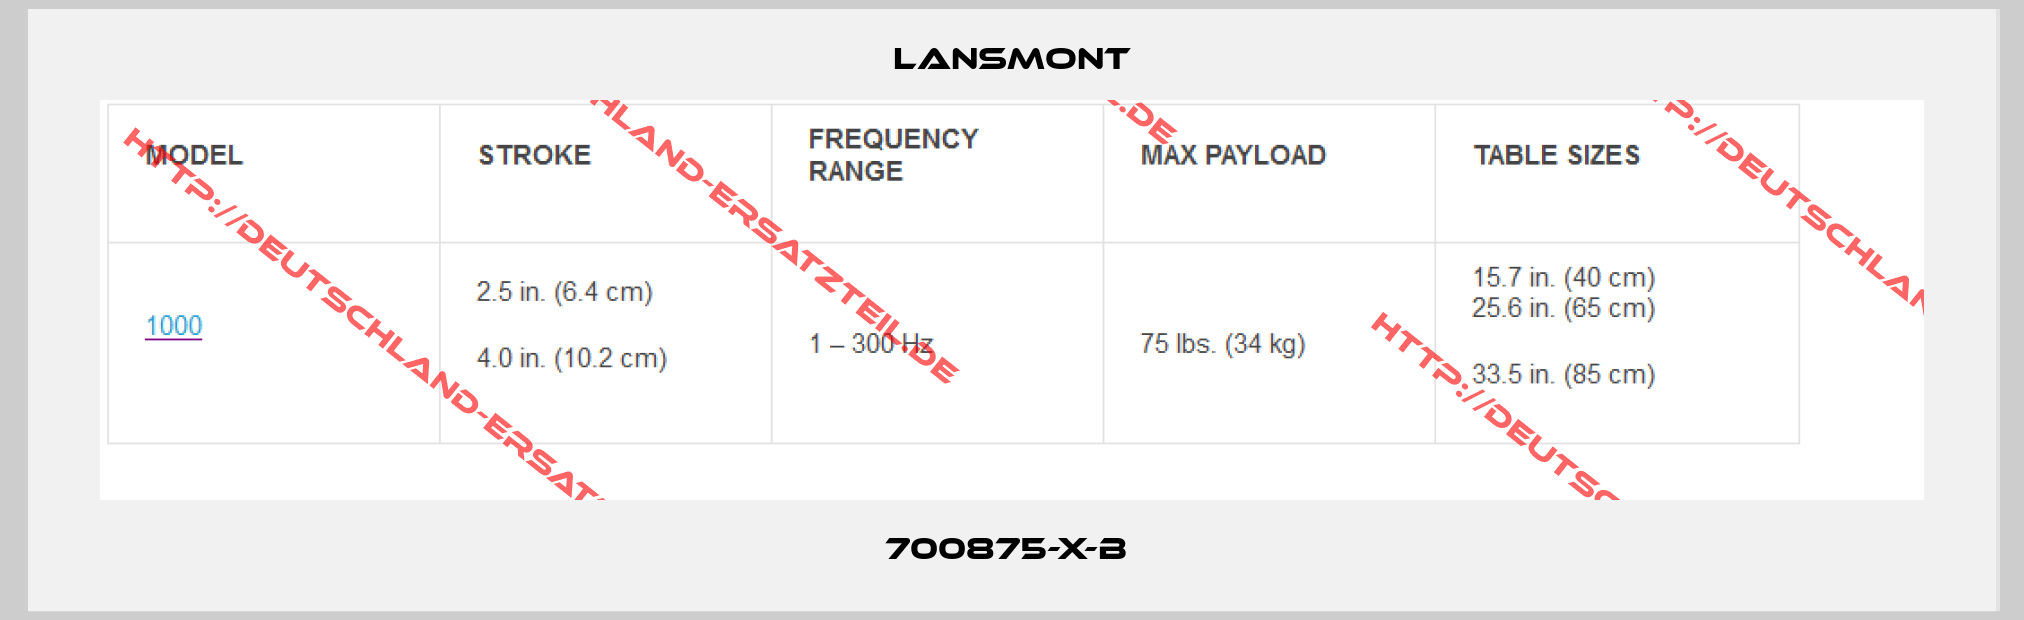 Lansmont-700875-X-B 